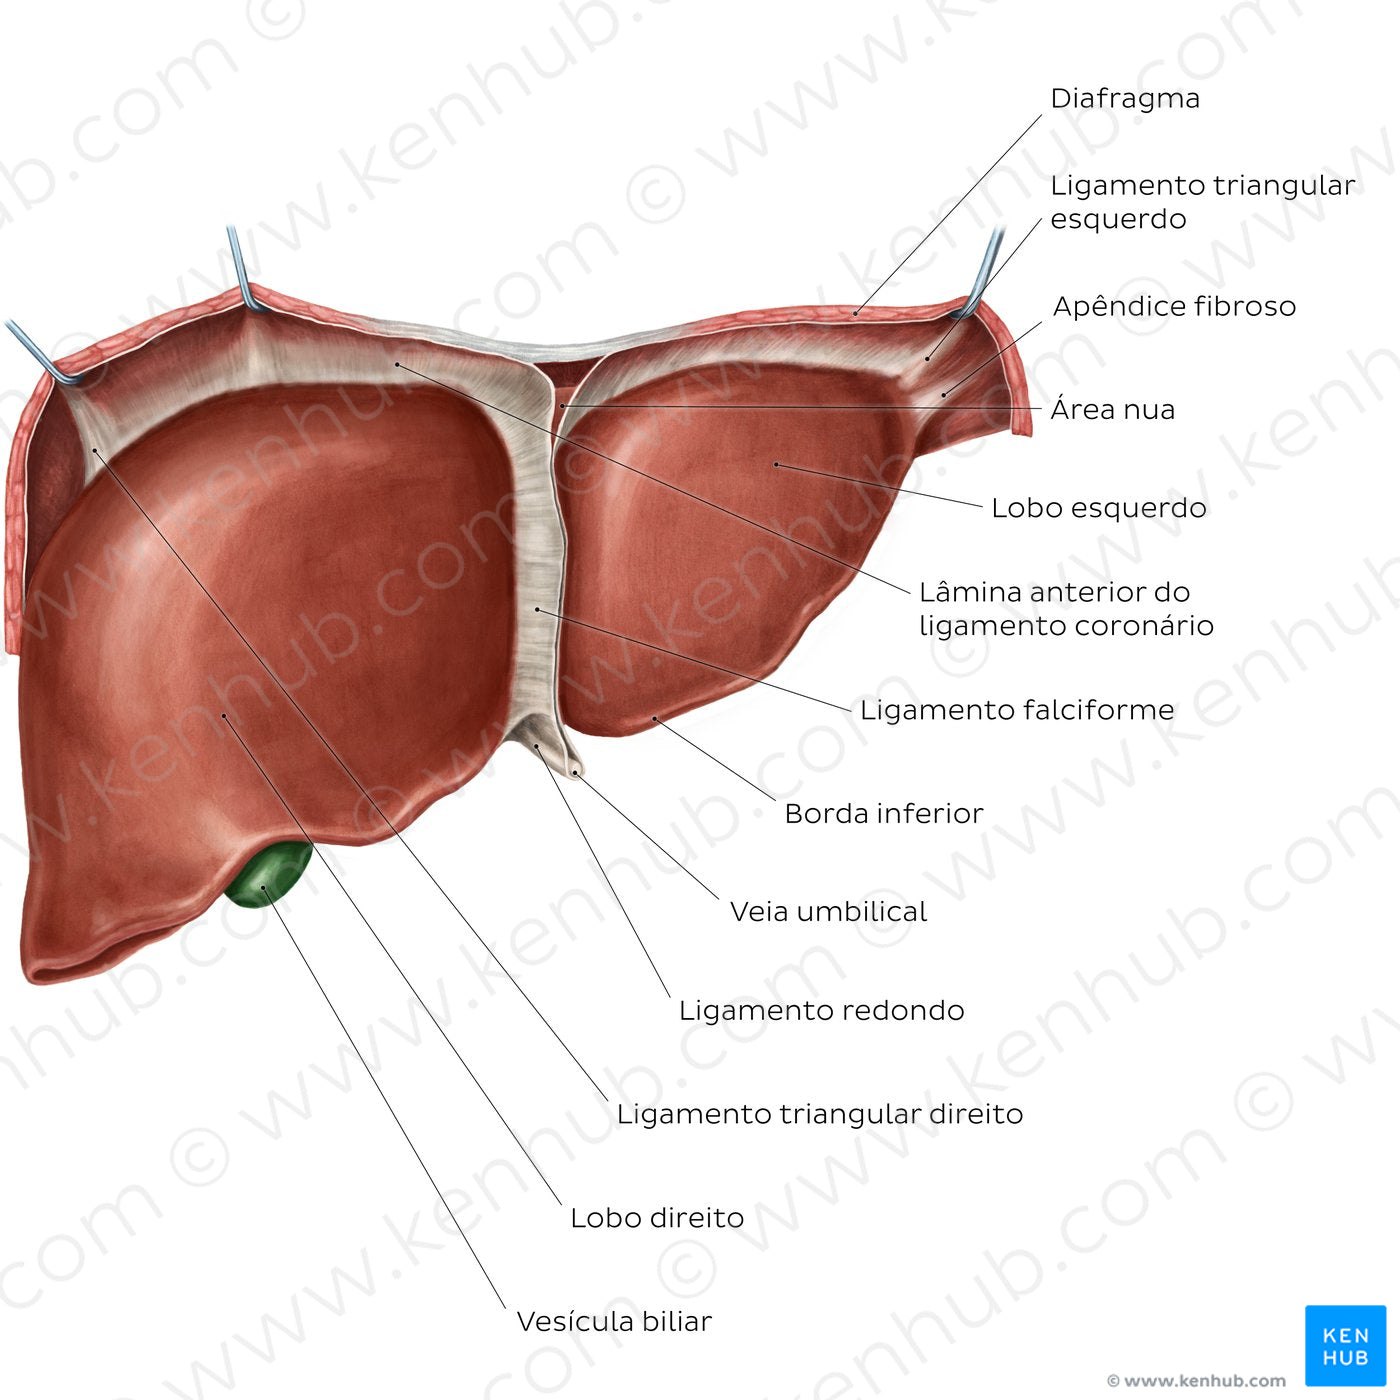 Anterior view of the liver (Portuguese)